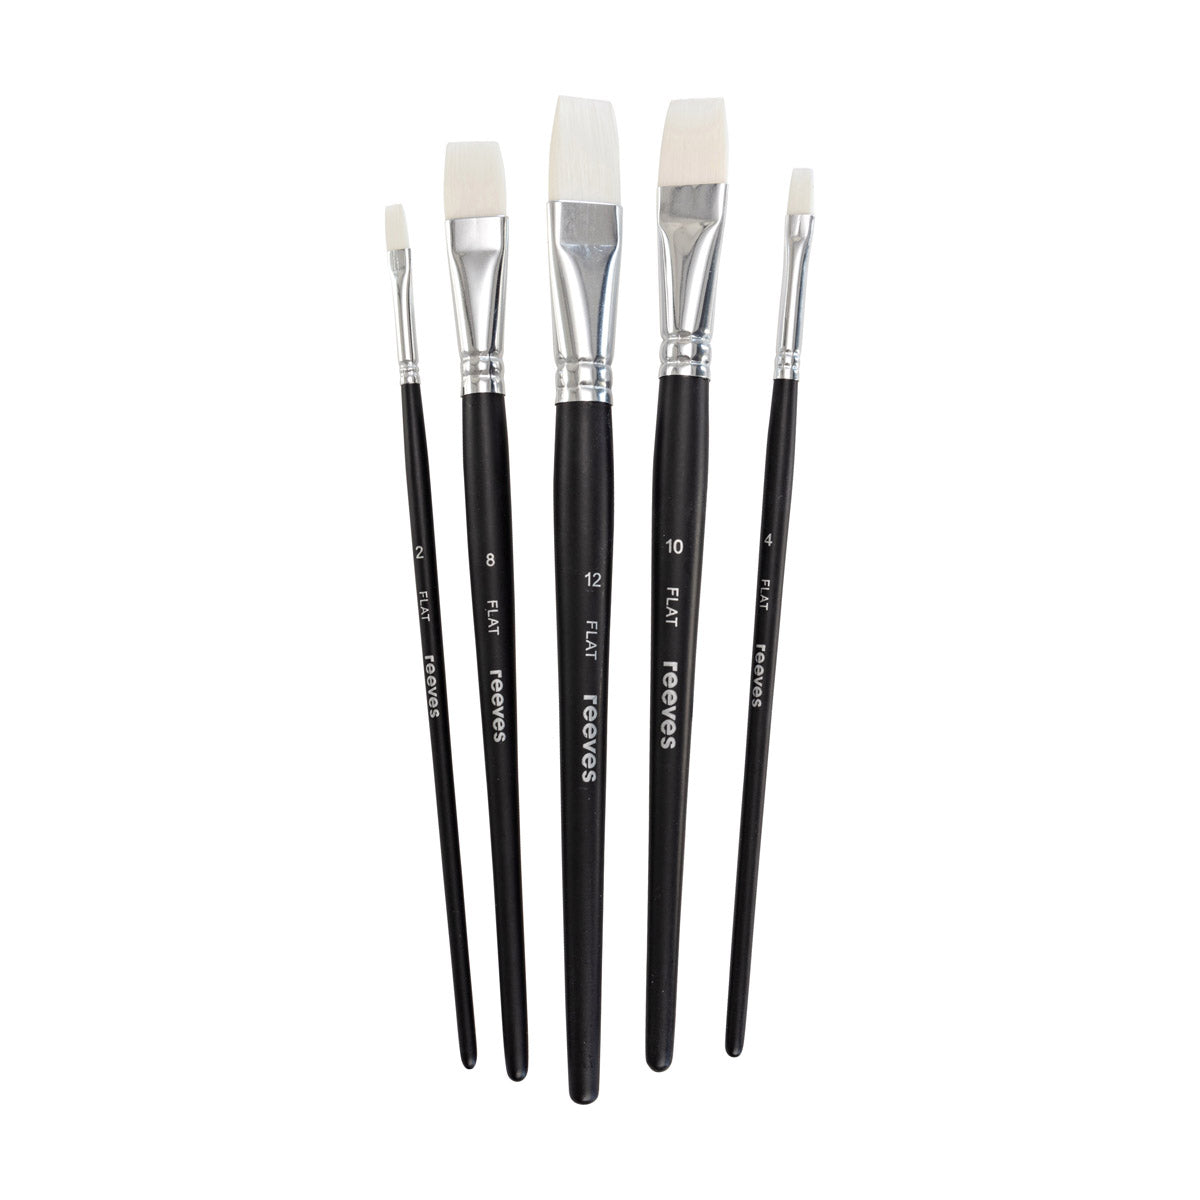 Reeves - Acrylic Brush set - Short Handle Flat - 5x Brush Pack